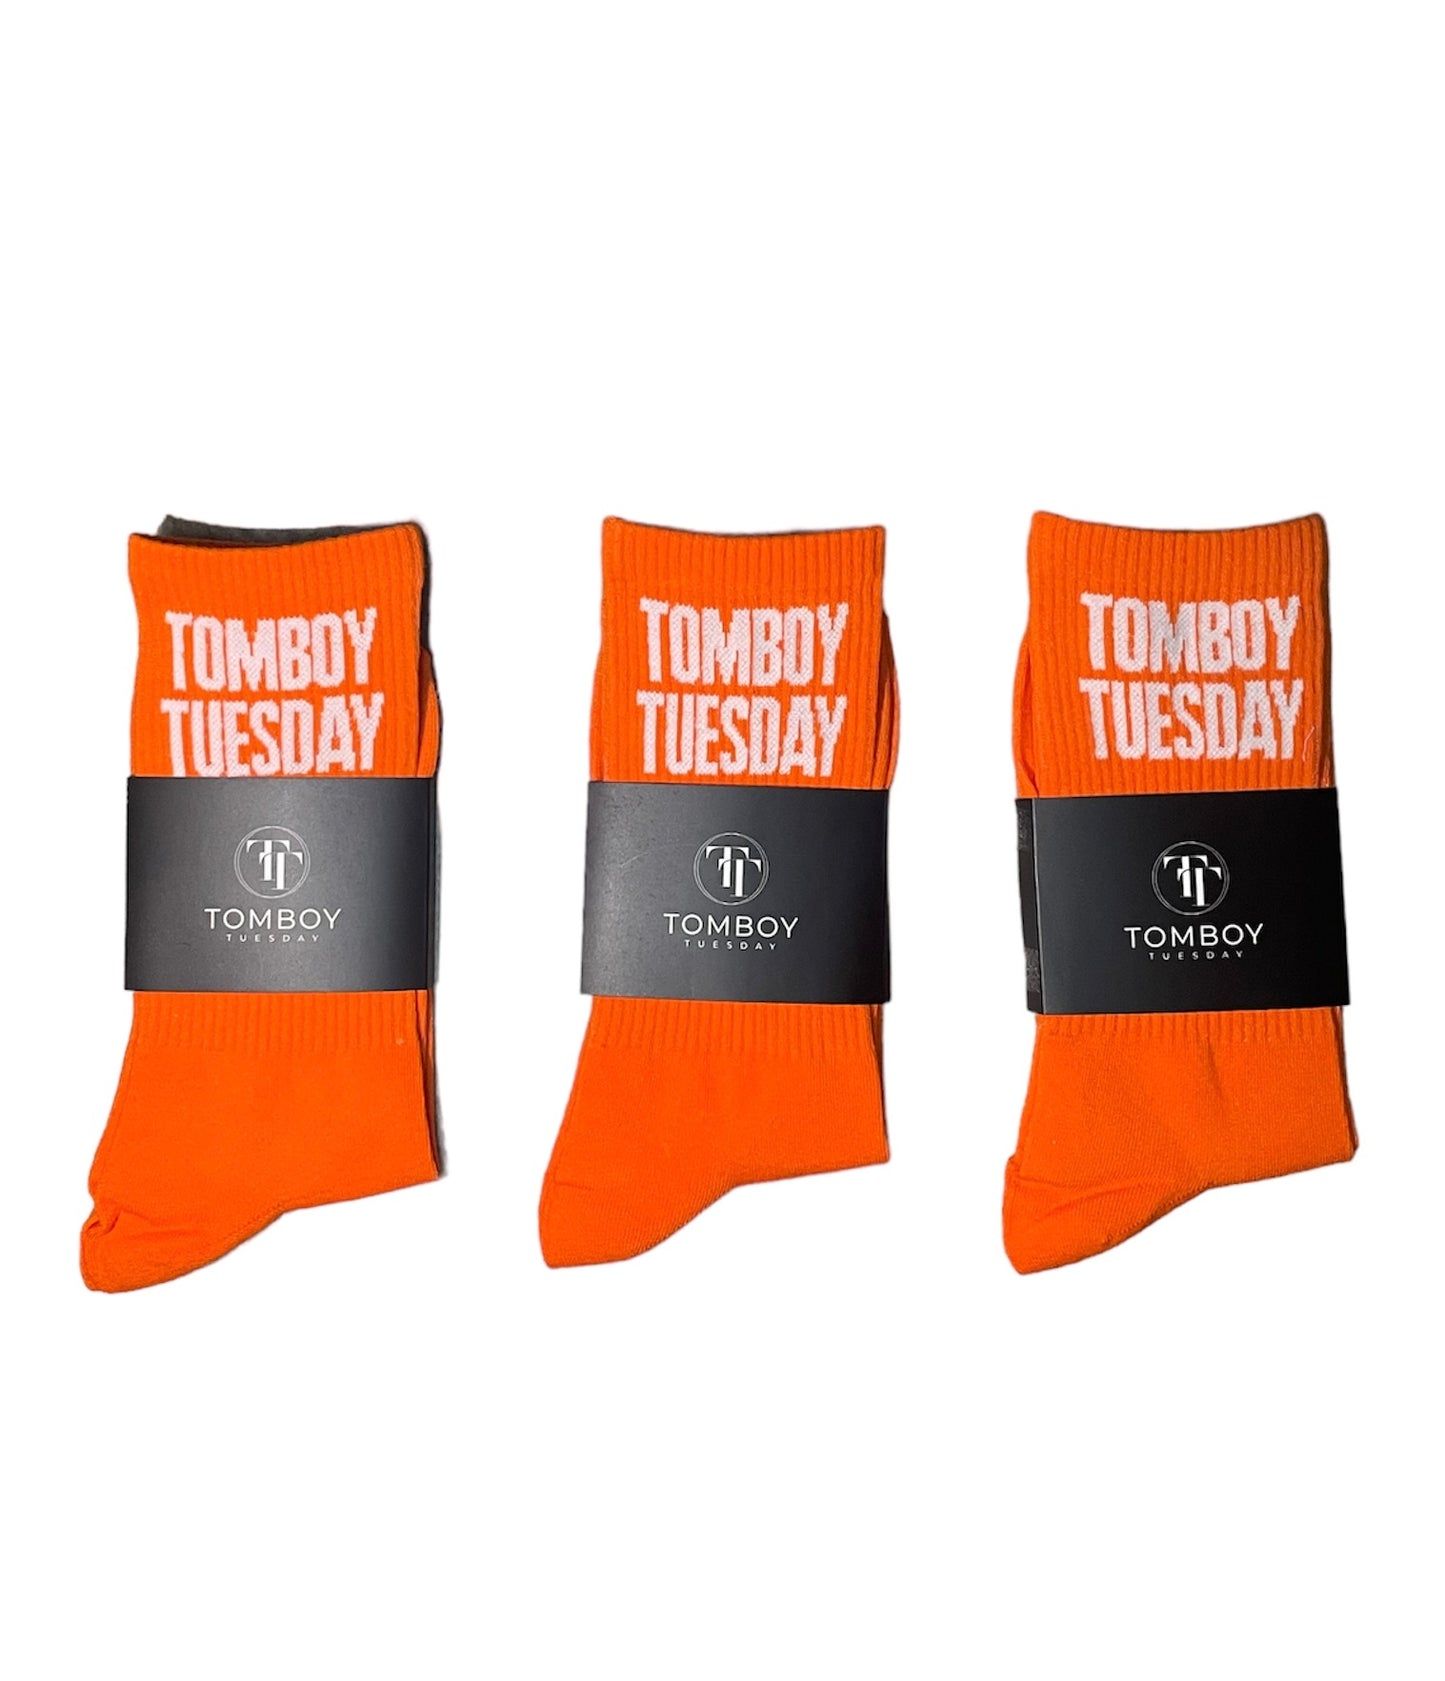 Tomboy Tuesday Crew Sock